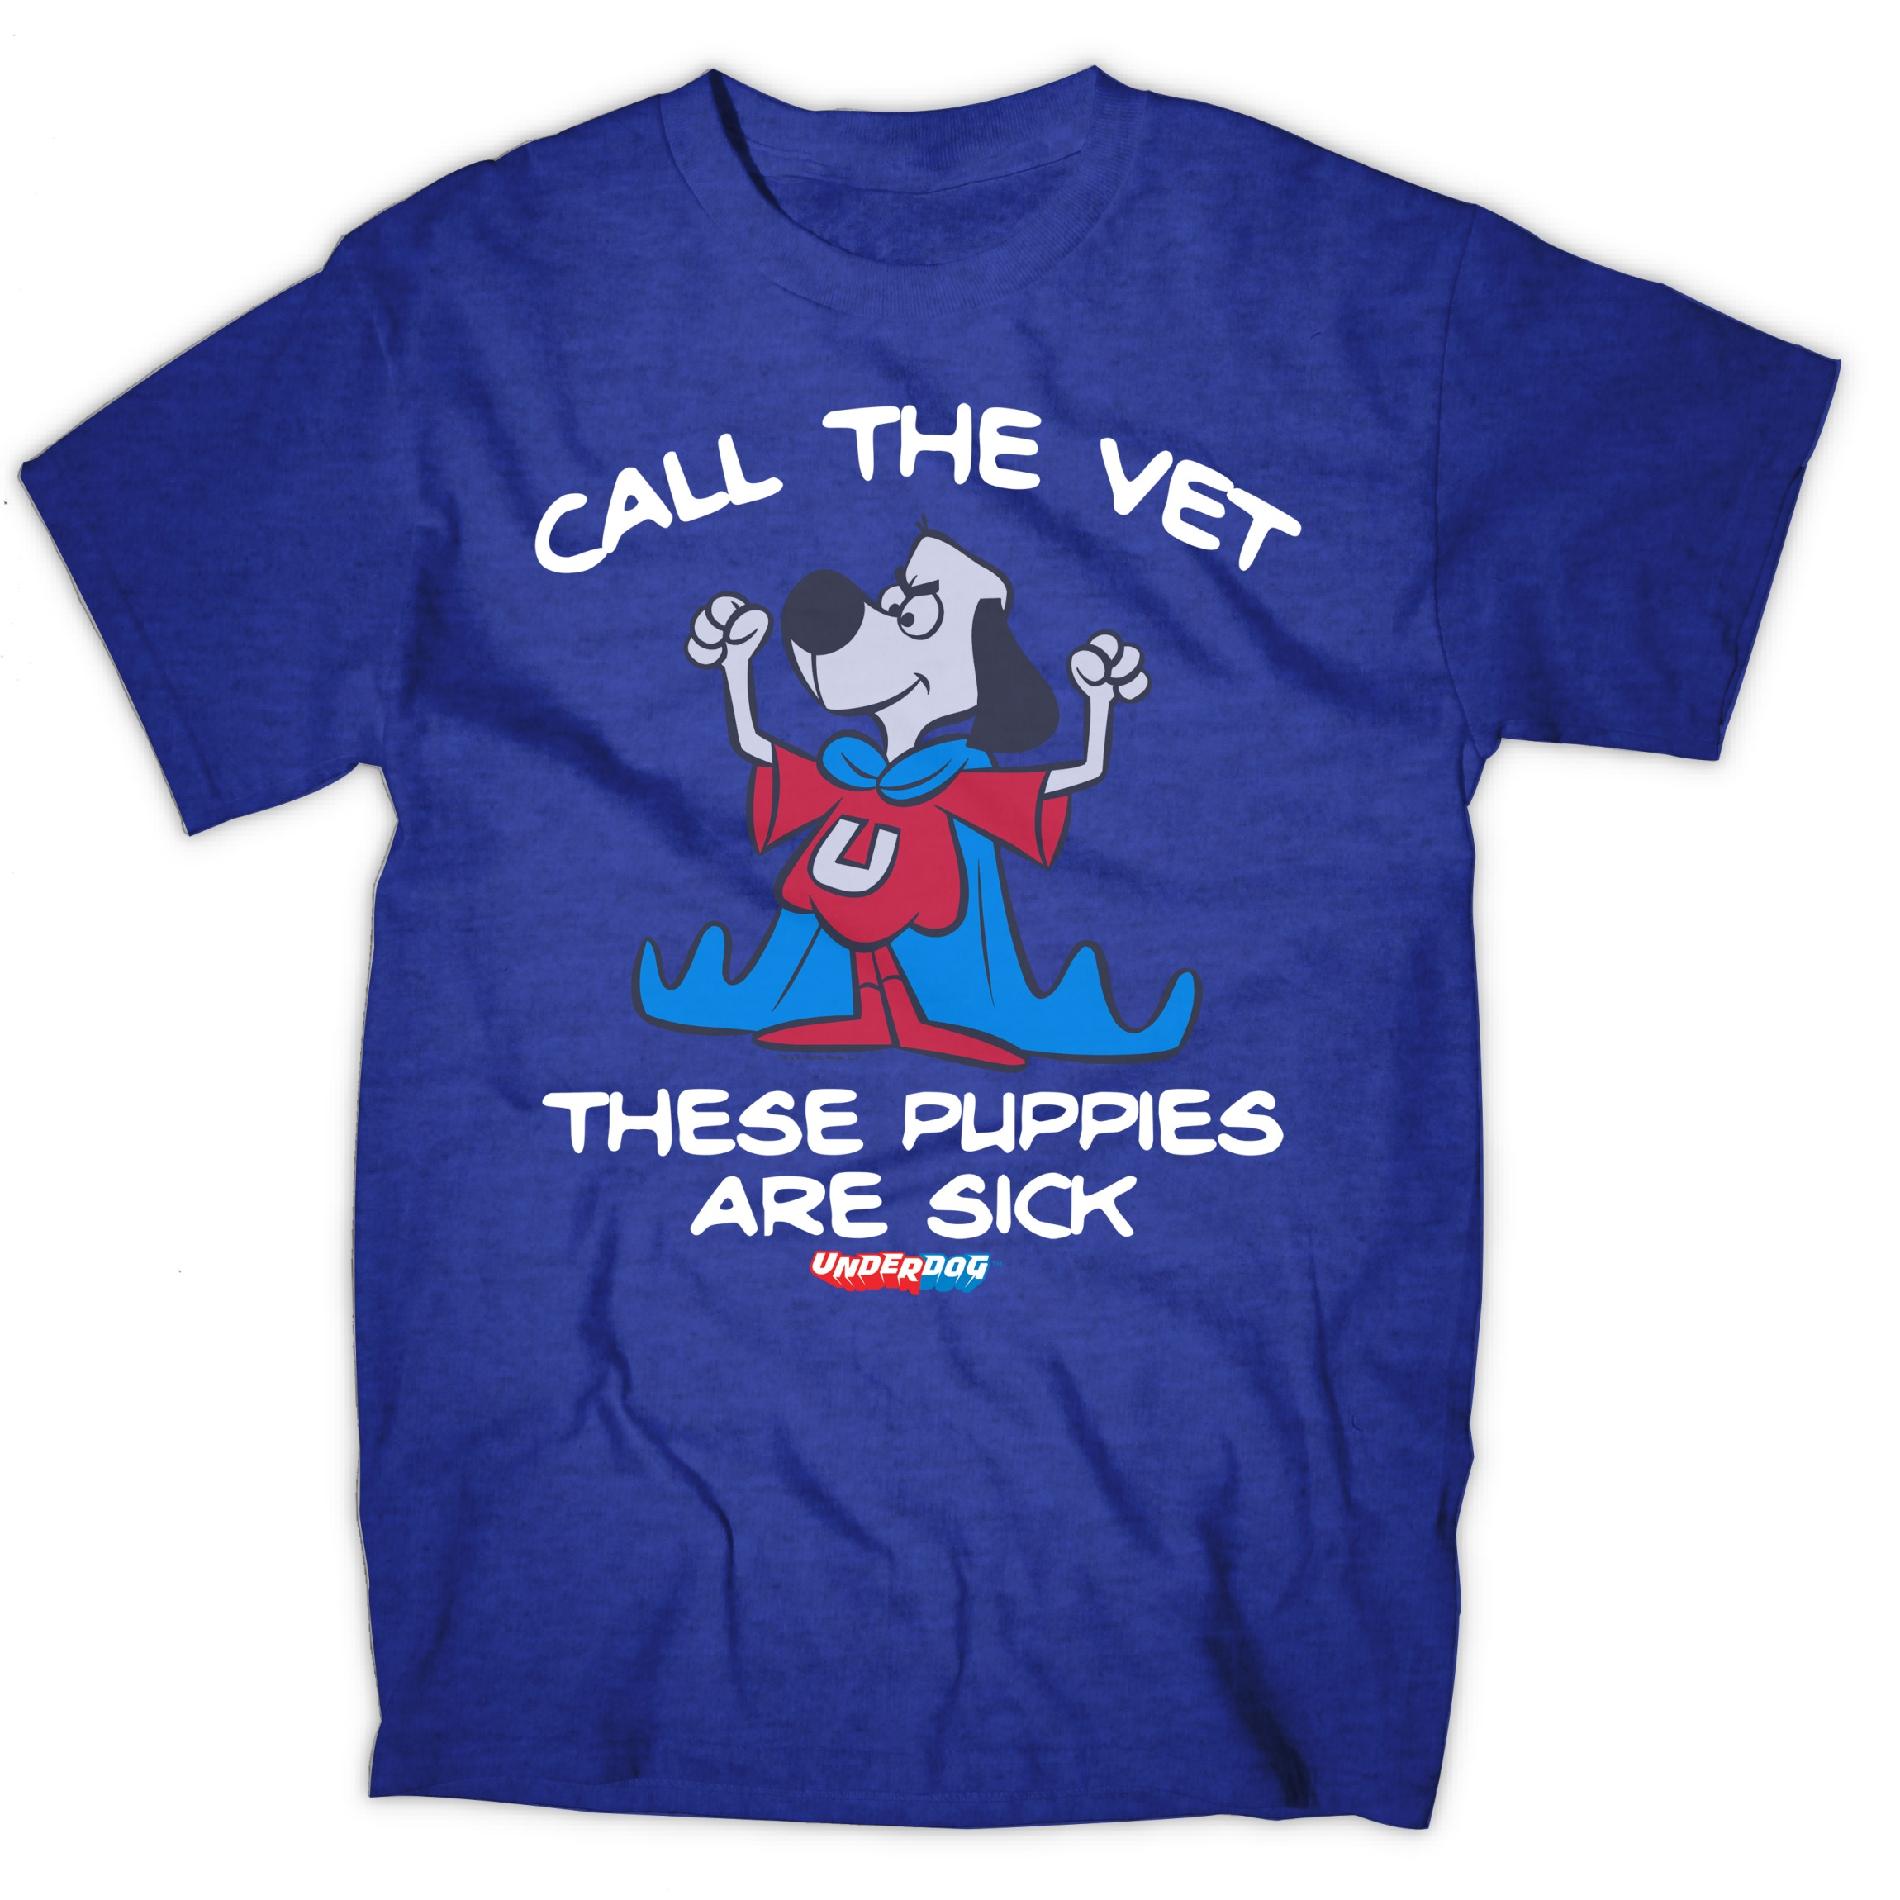 Underdog Men's Graphic T-Shirt - Call The Vet